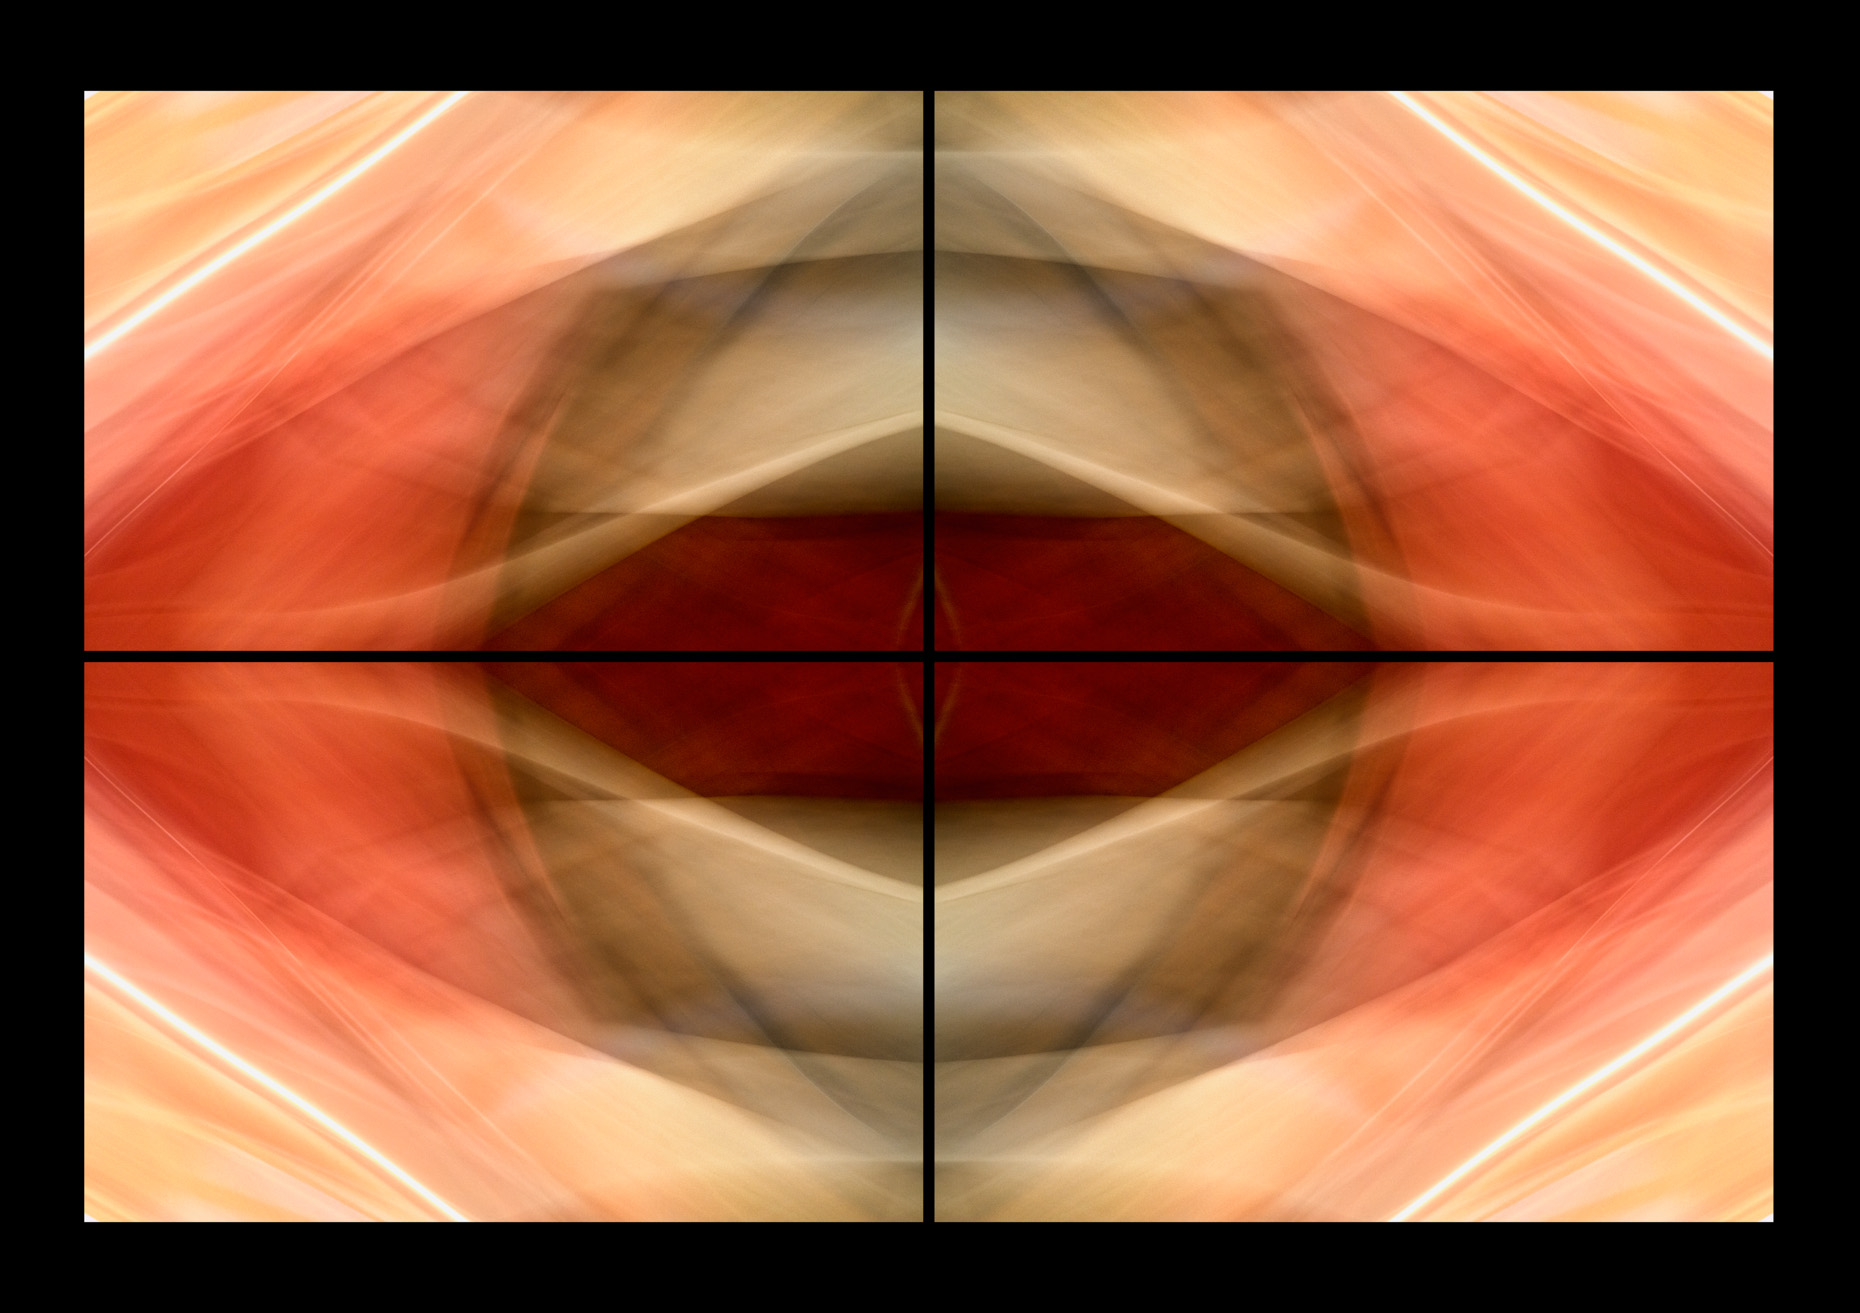 Sensual-Synergy-2-Abstract-Art-Laria-HiWeb-2.jpg